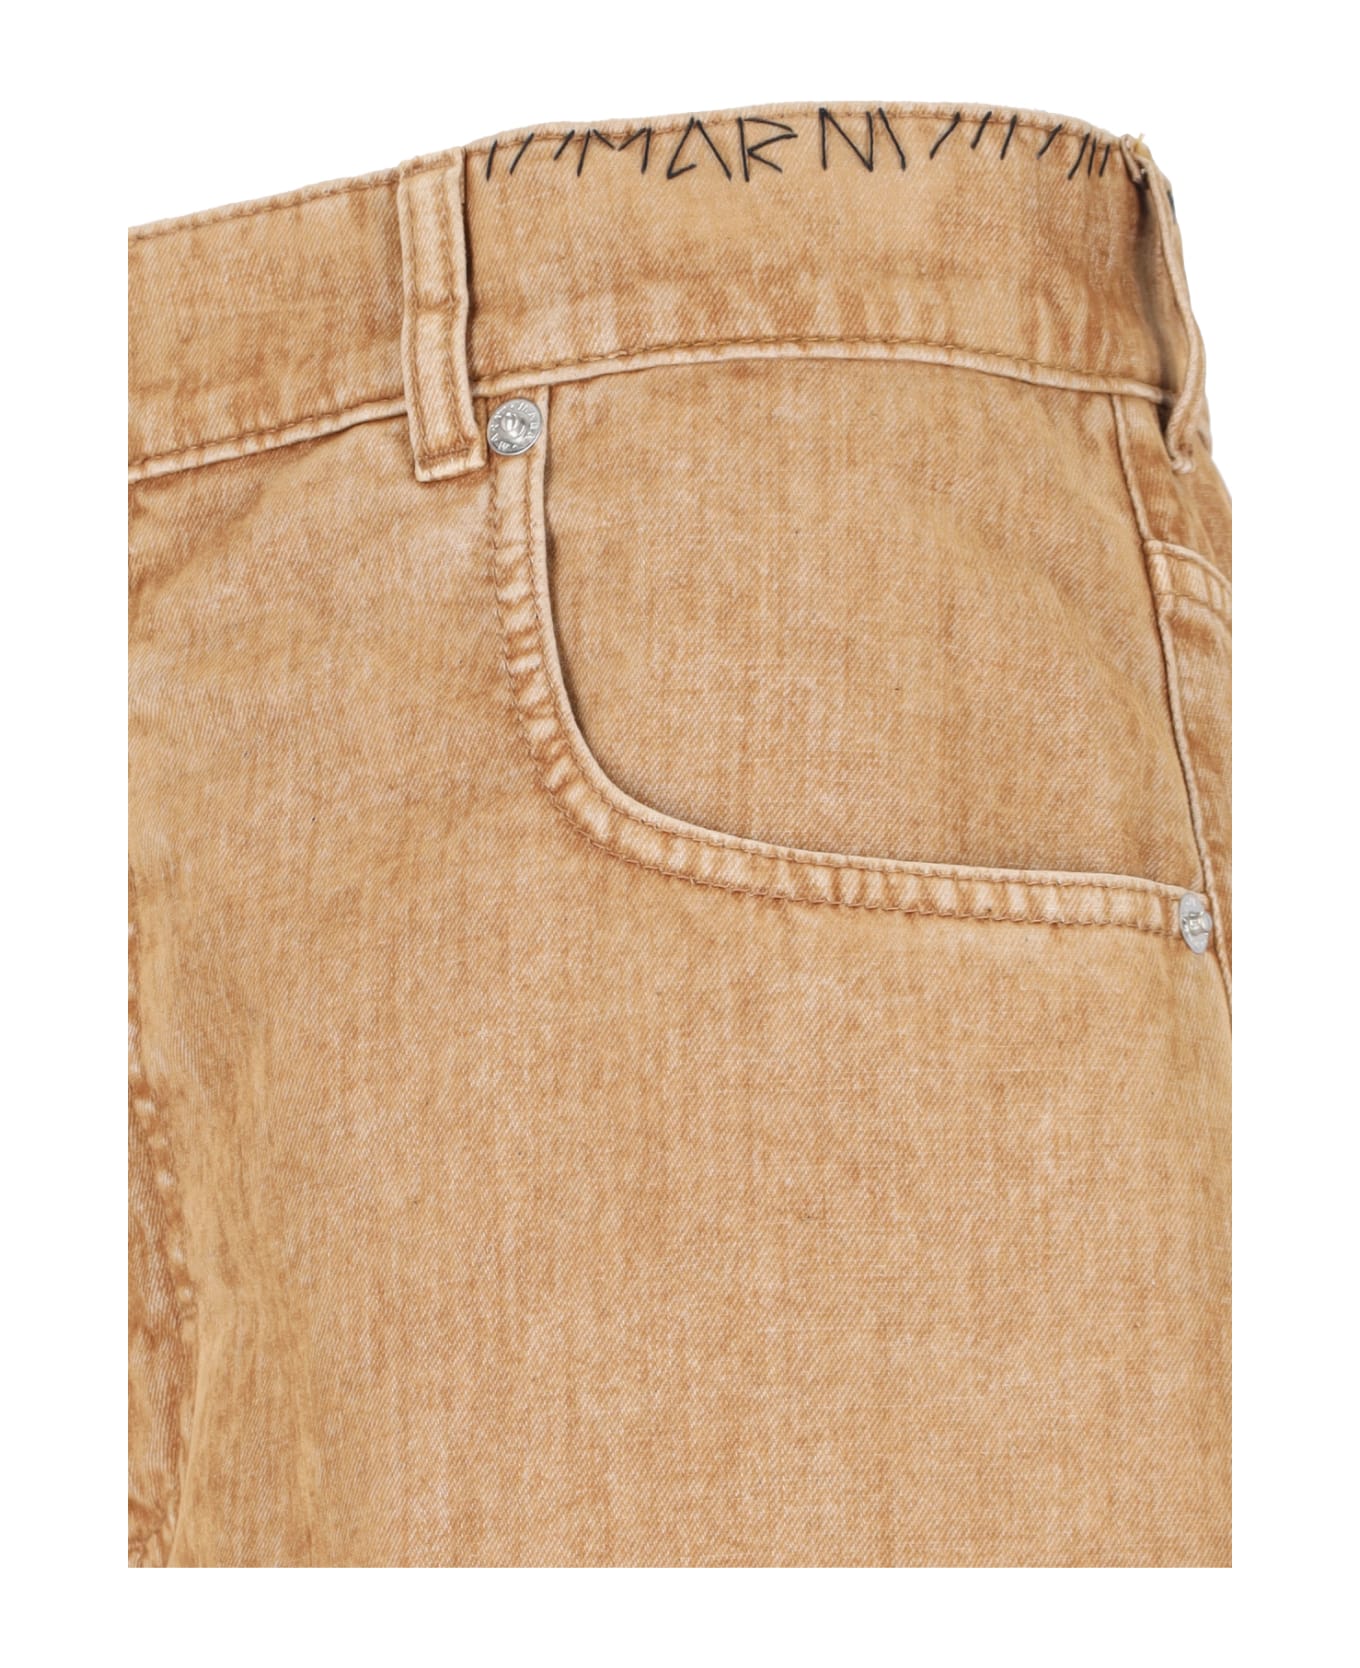 Marni Lapel Detail Jeans - Brown